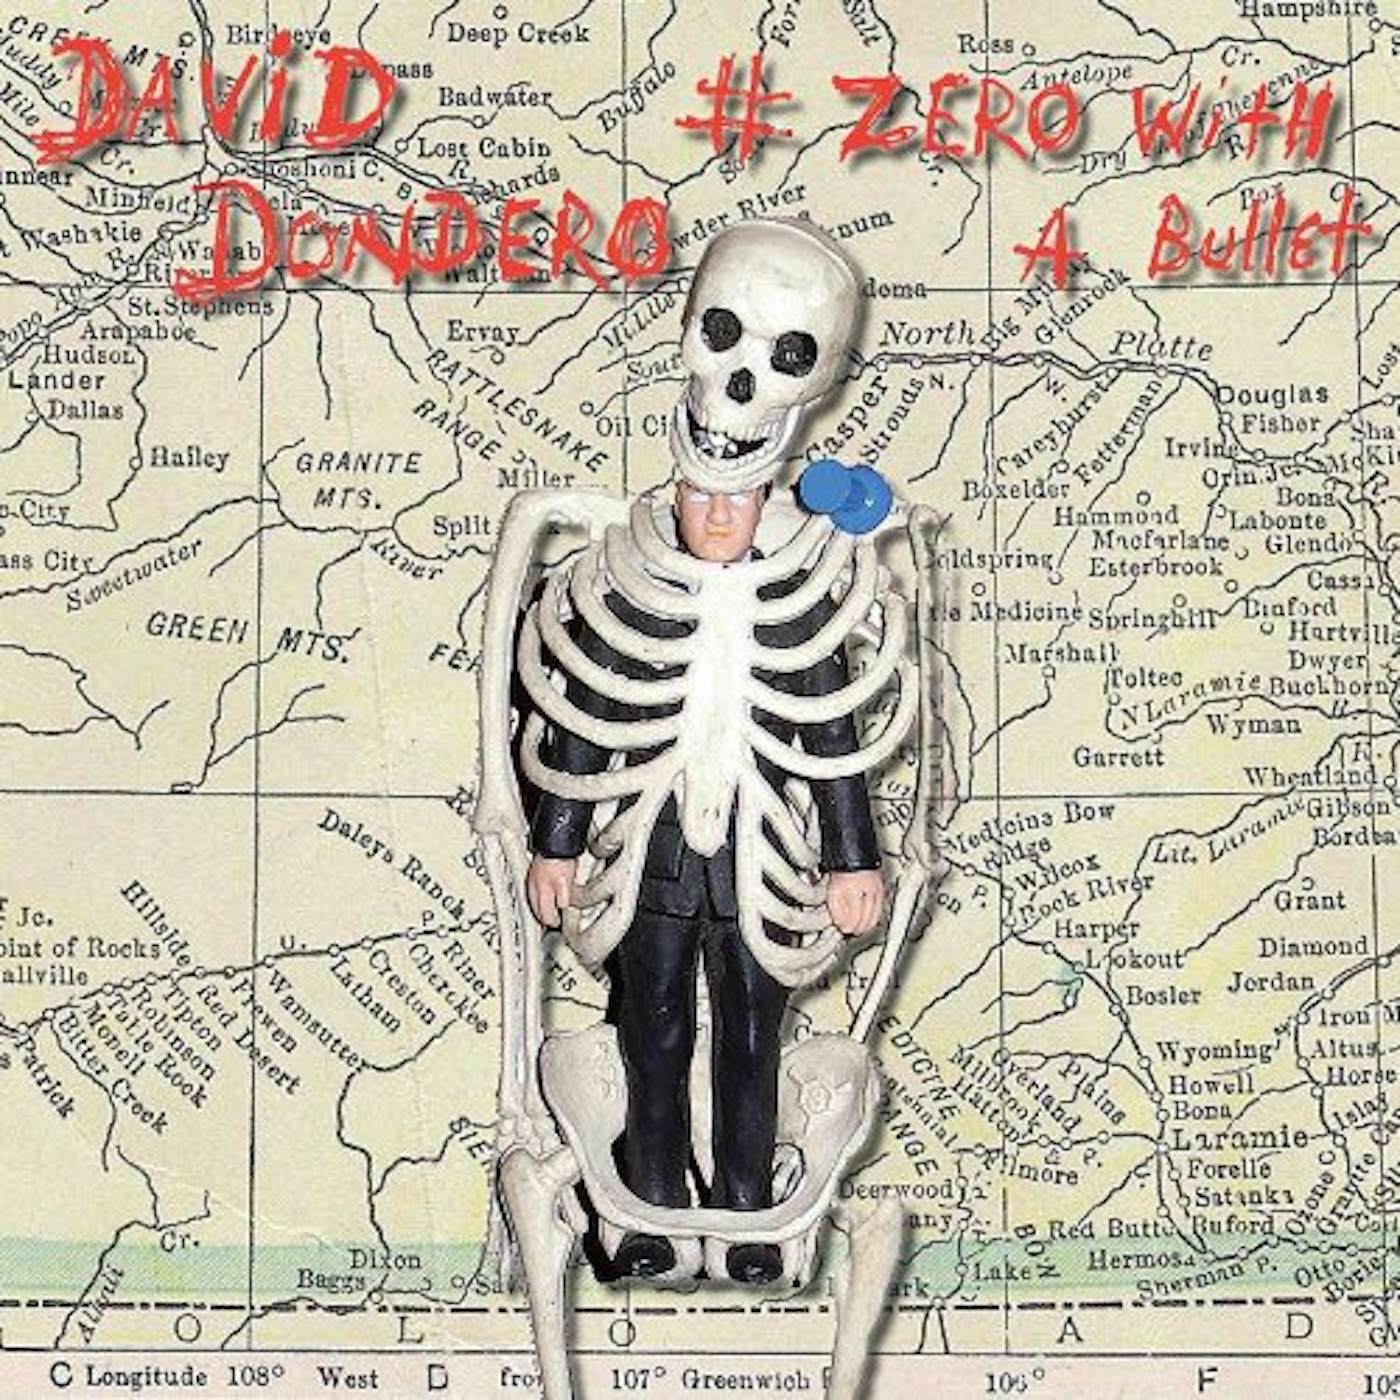 David Dondero ZERO WITH A BULLET Vinyl Record